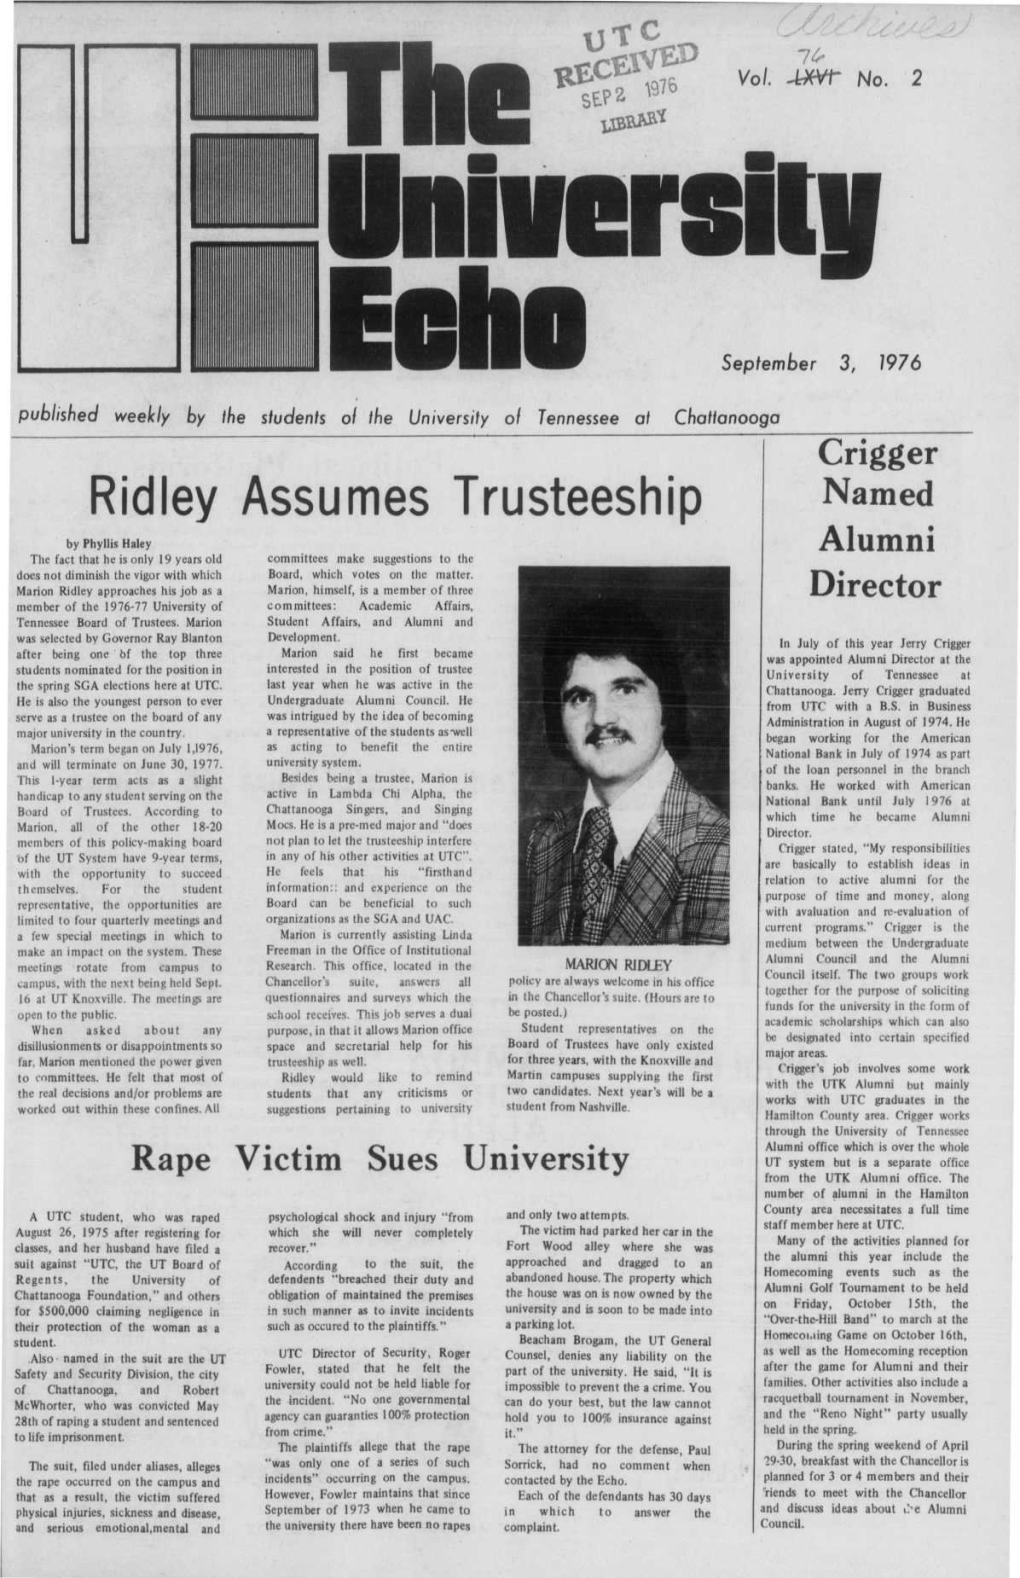 Ridley Assumes Trusteeship